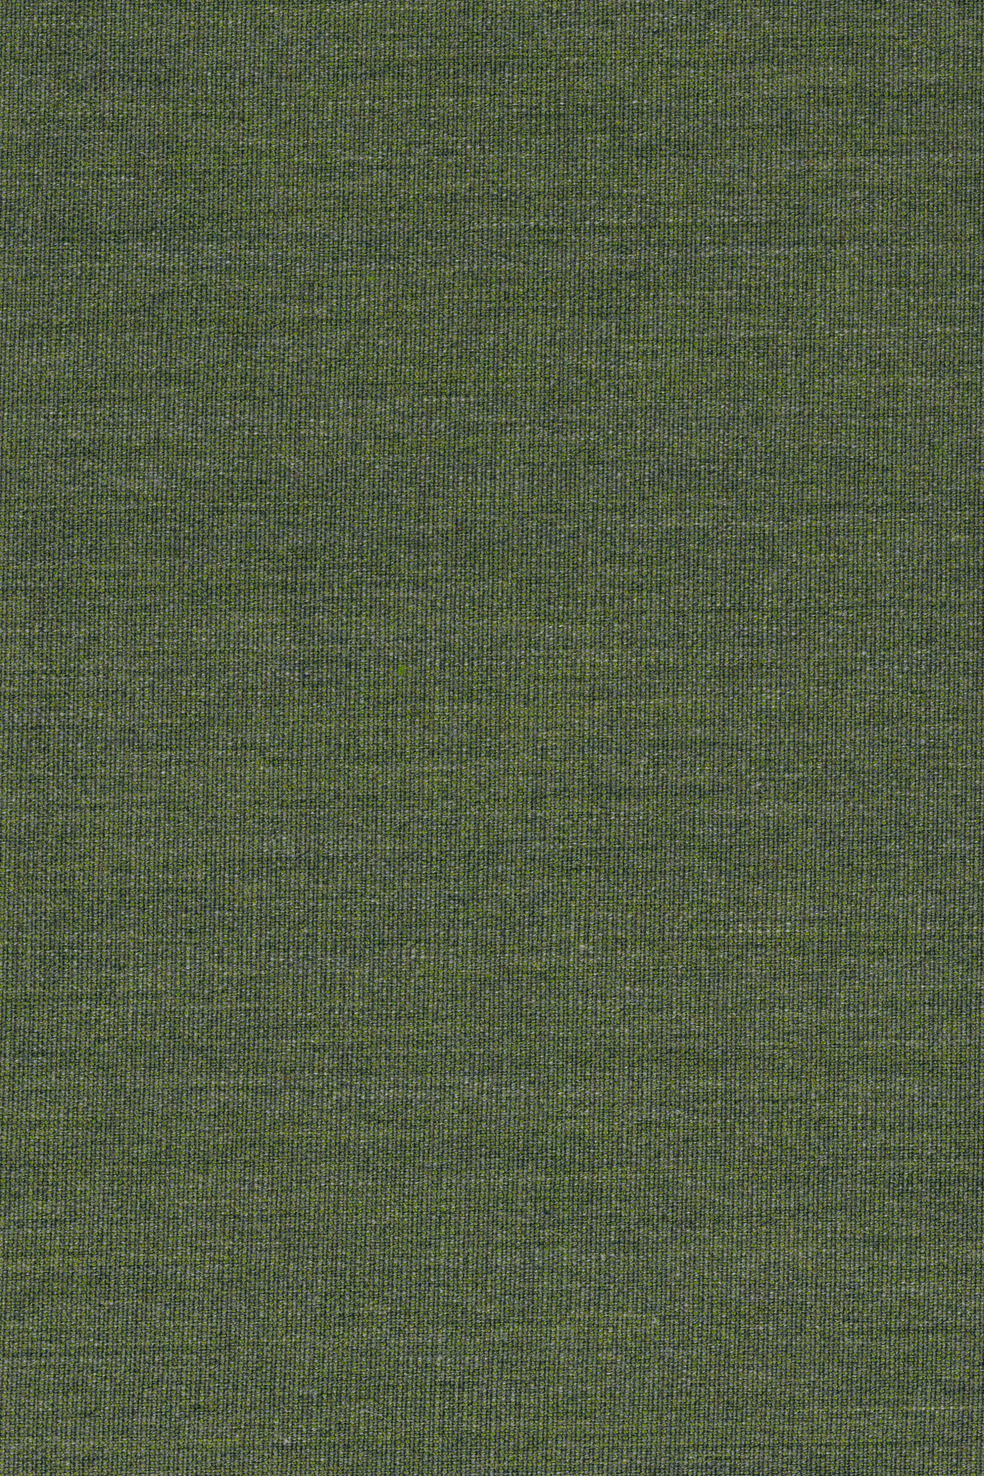 Fabric sample Canvas 2 974 green